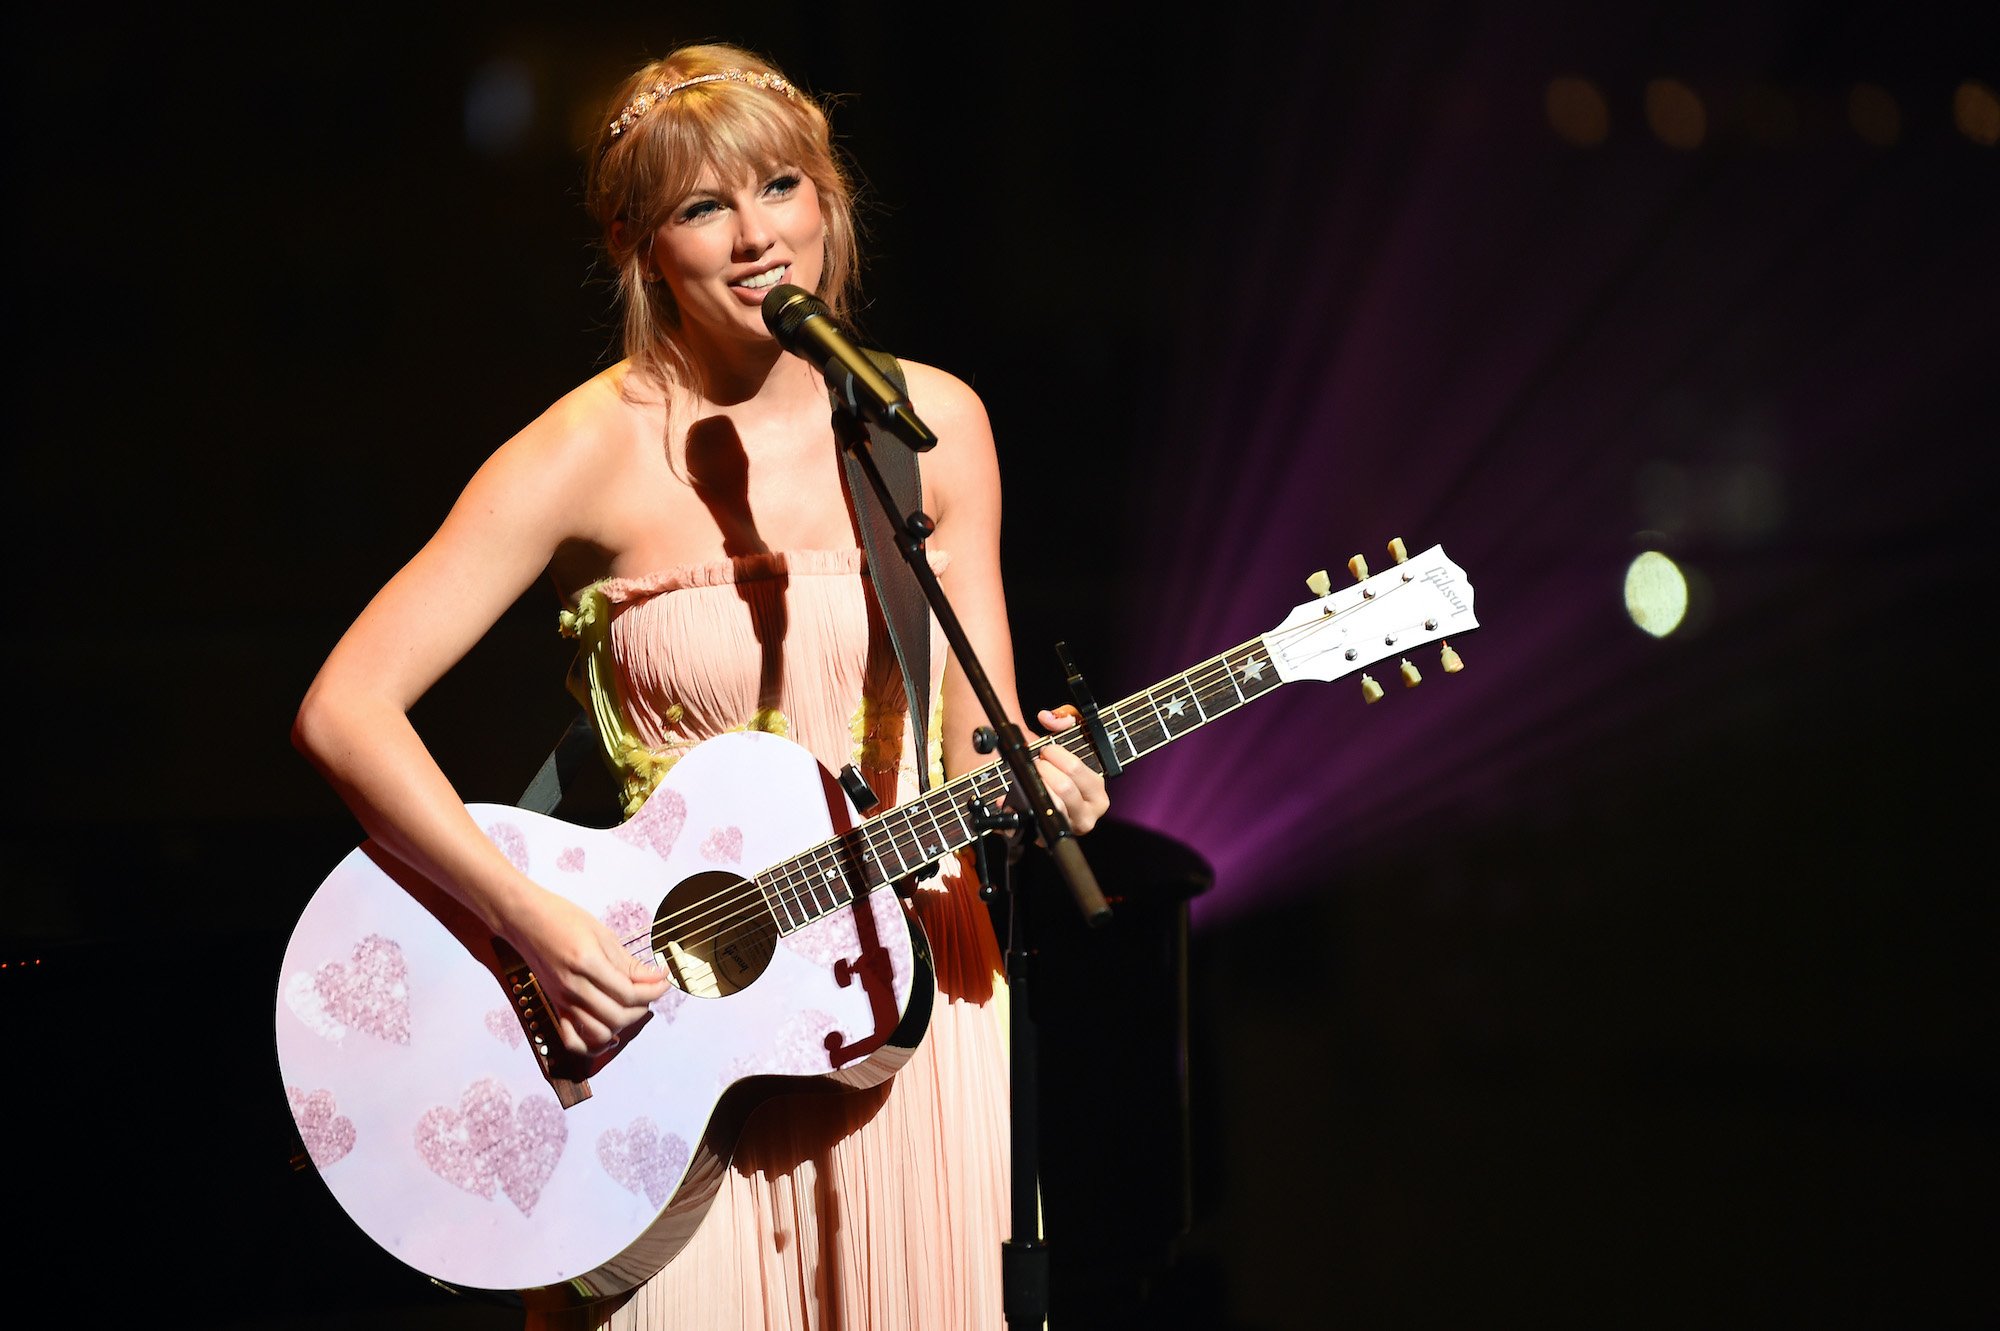 Glitch - Taylor Swift | Sticker